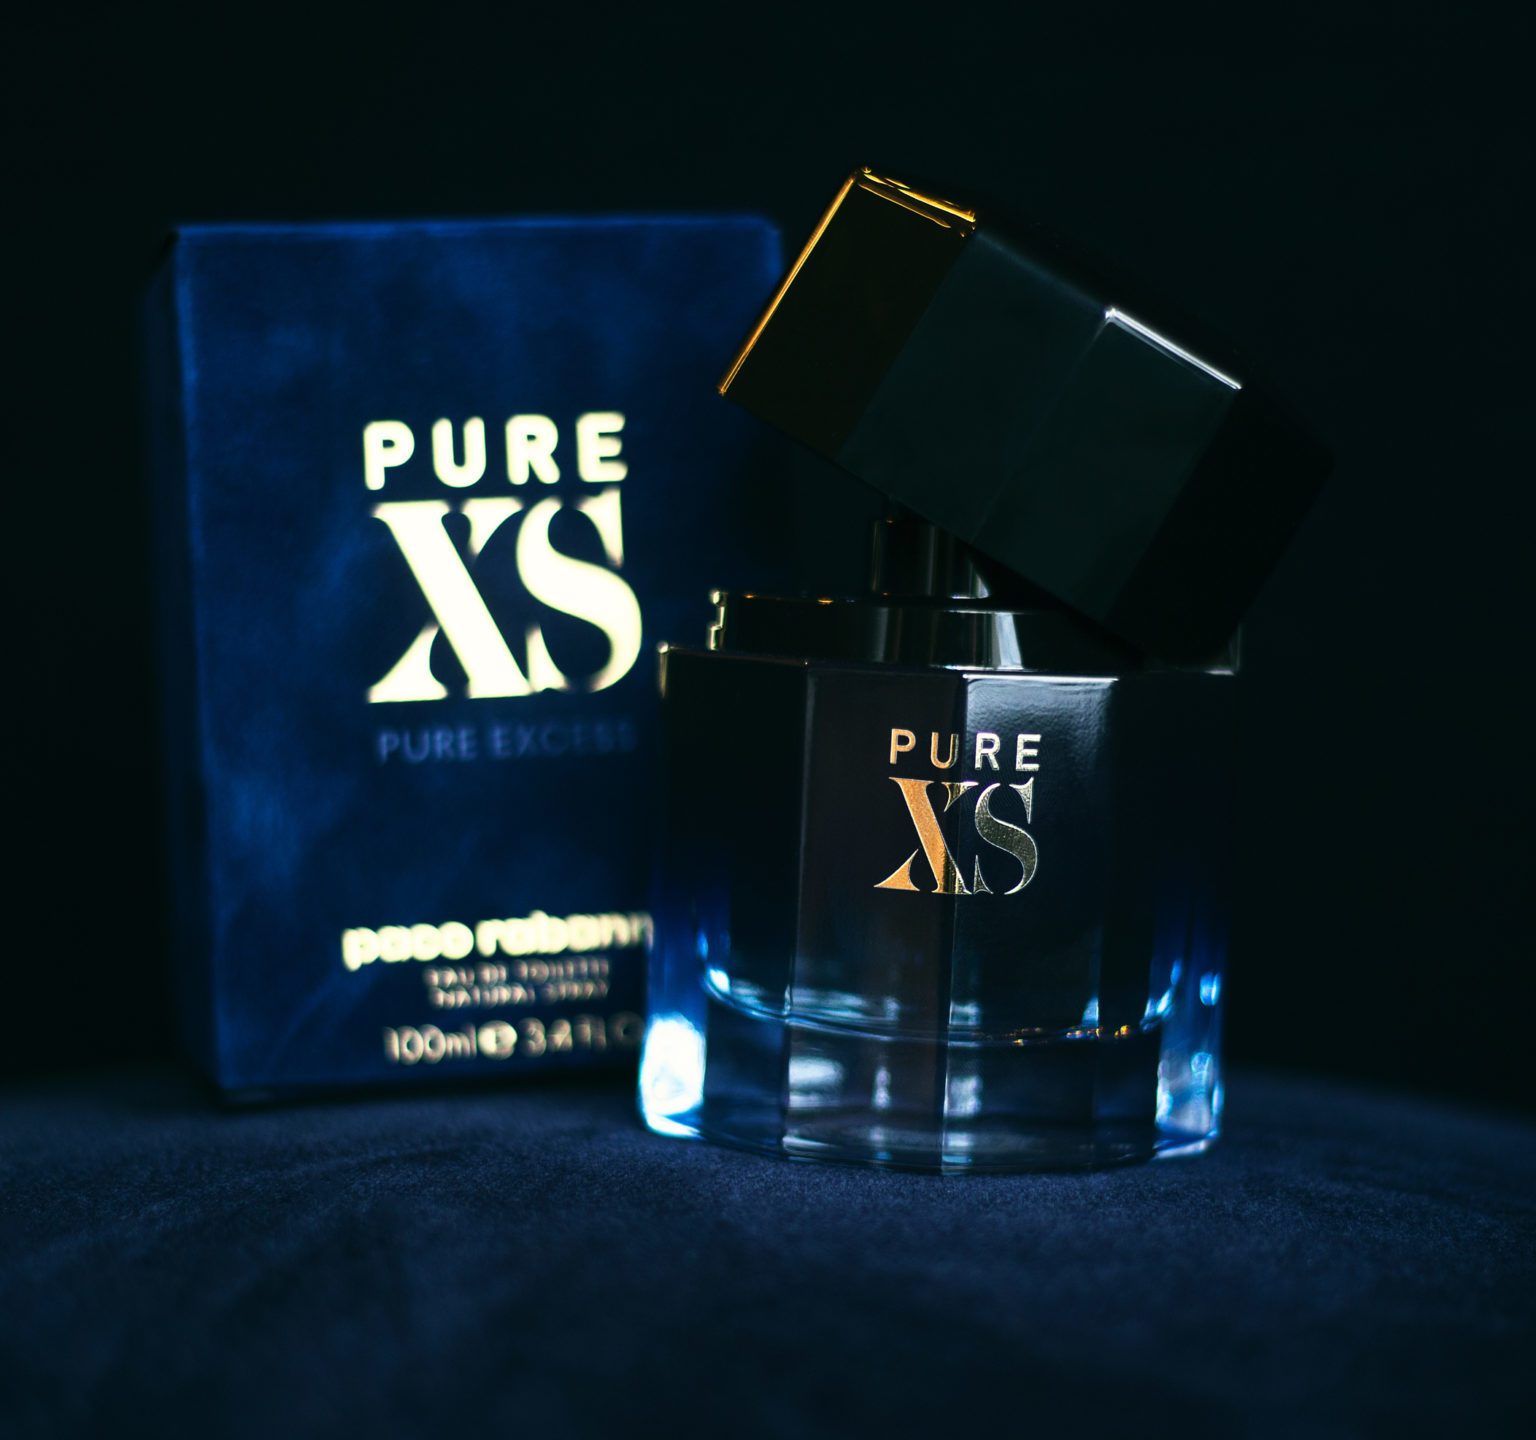 Pure XS » Paco Rabanne » The Parfumerie » Sri Lanka